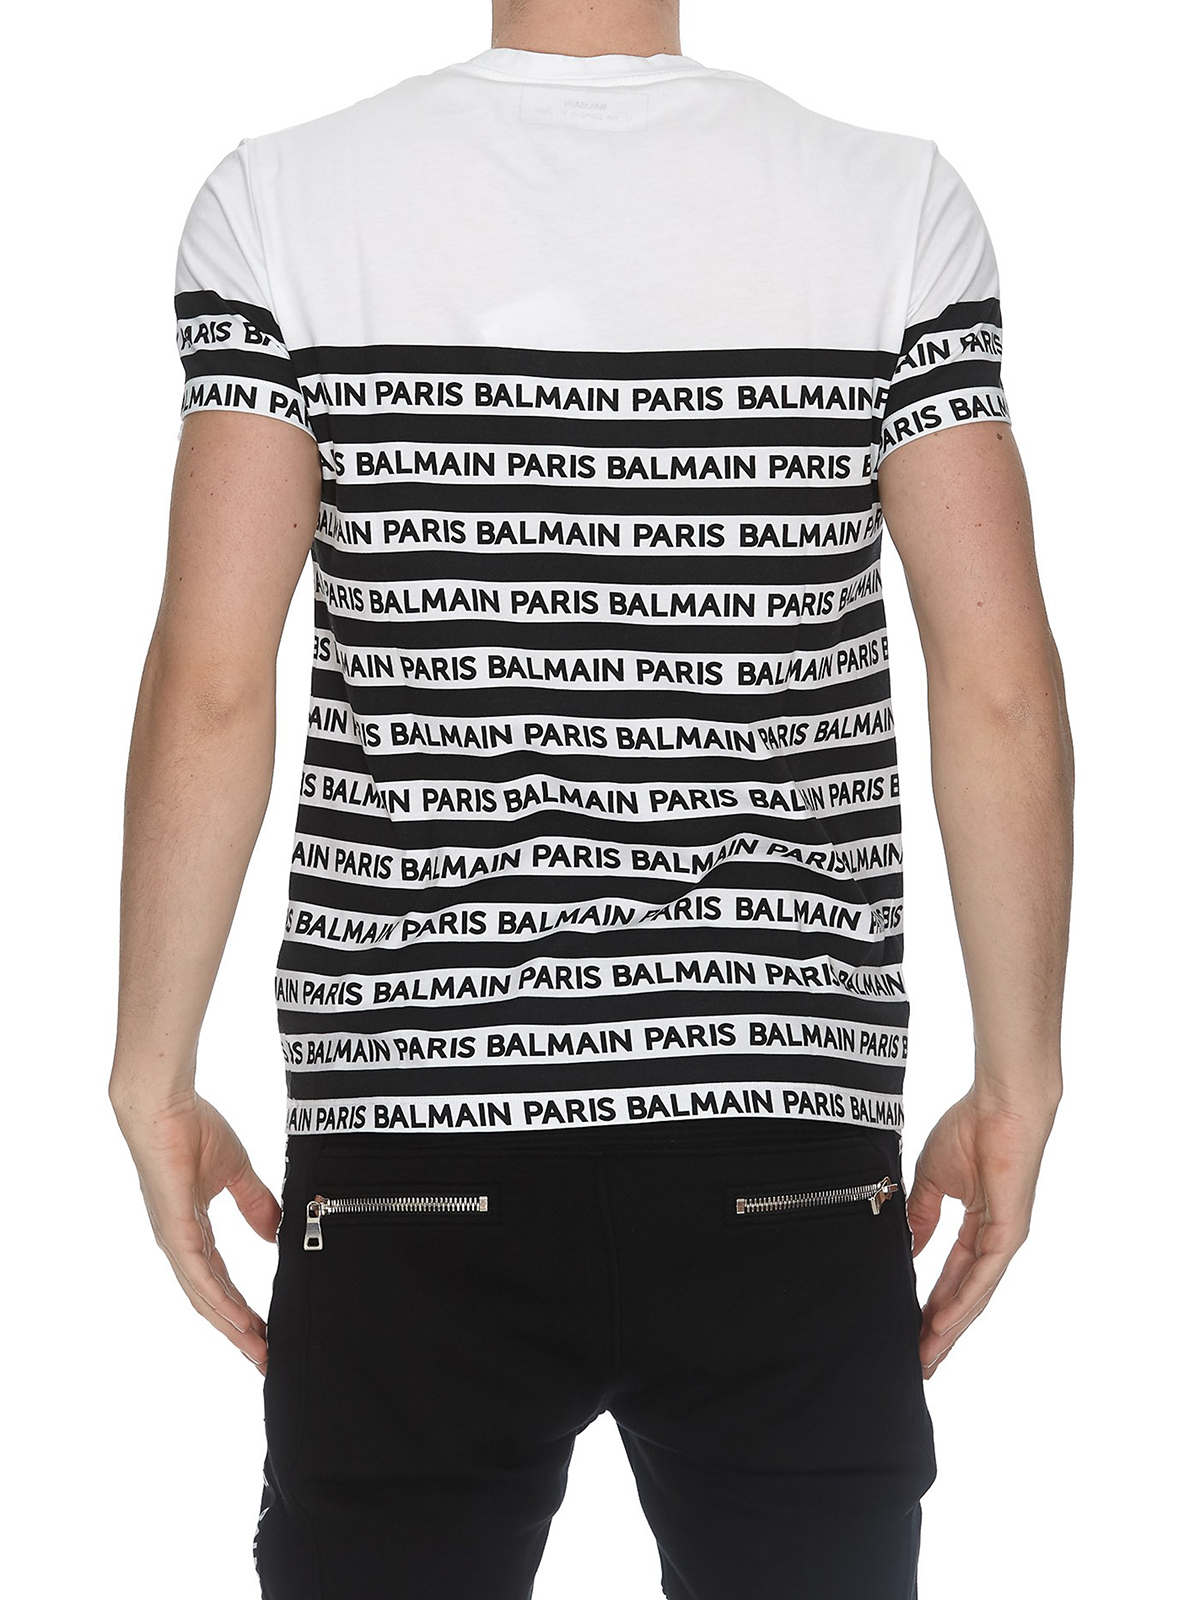 Tシャツ Balmain - Tシャツ 黒 - RH01601I103EAB | iKRIX shop online